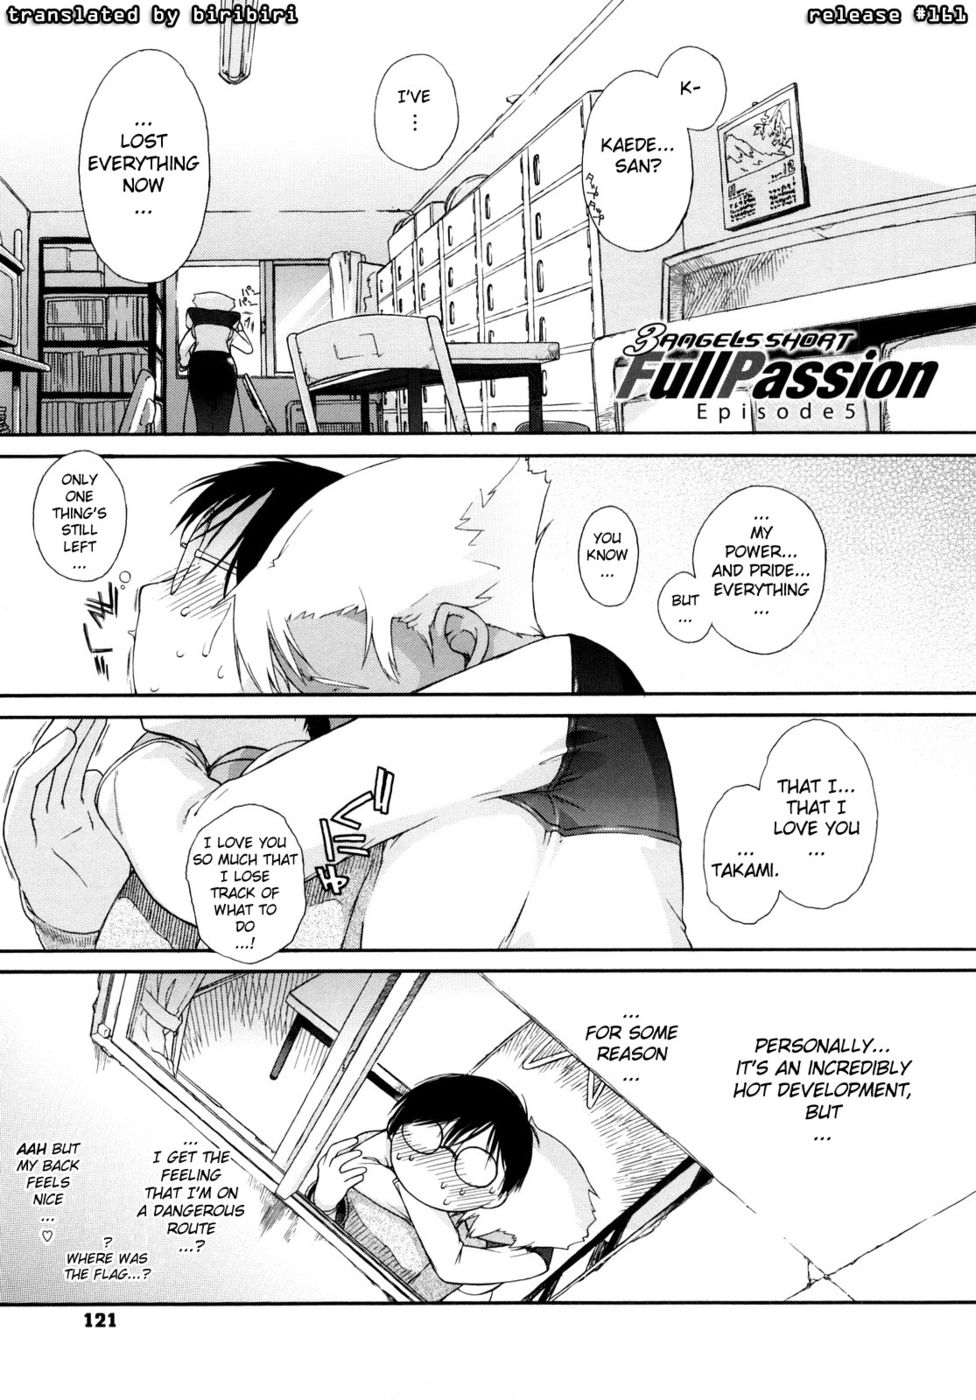 Hentai Manga Comic-3 Angels Short Full Passion-Chapter 6-1